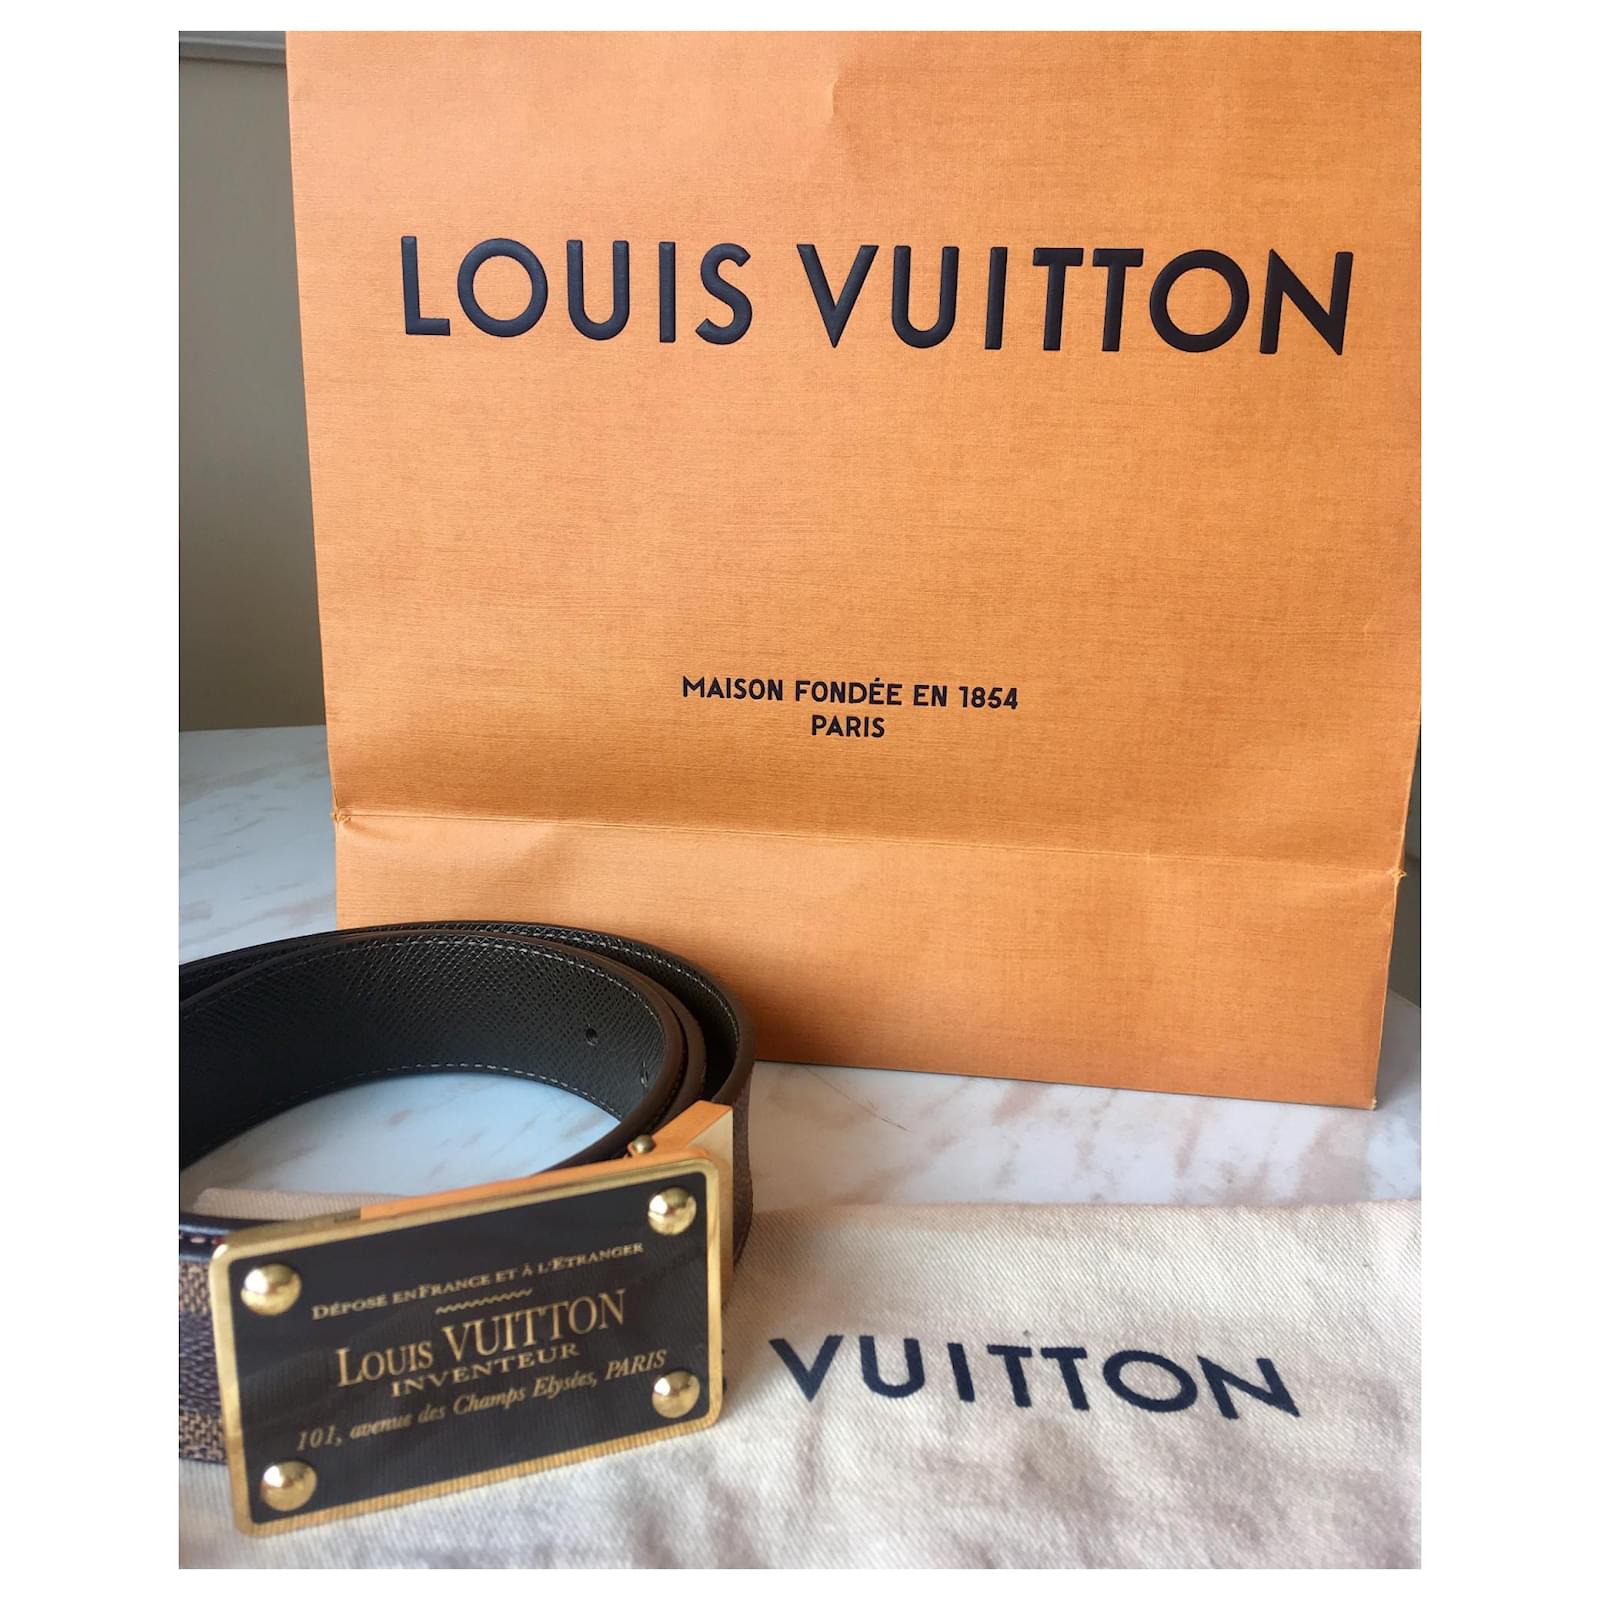 Louis Vuitton Inventeur - 2 For Sale on 1stDibs